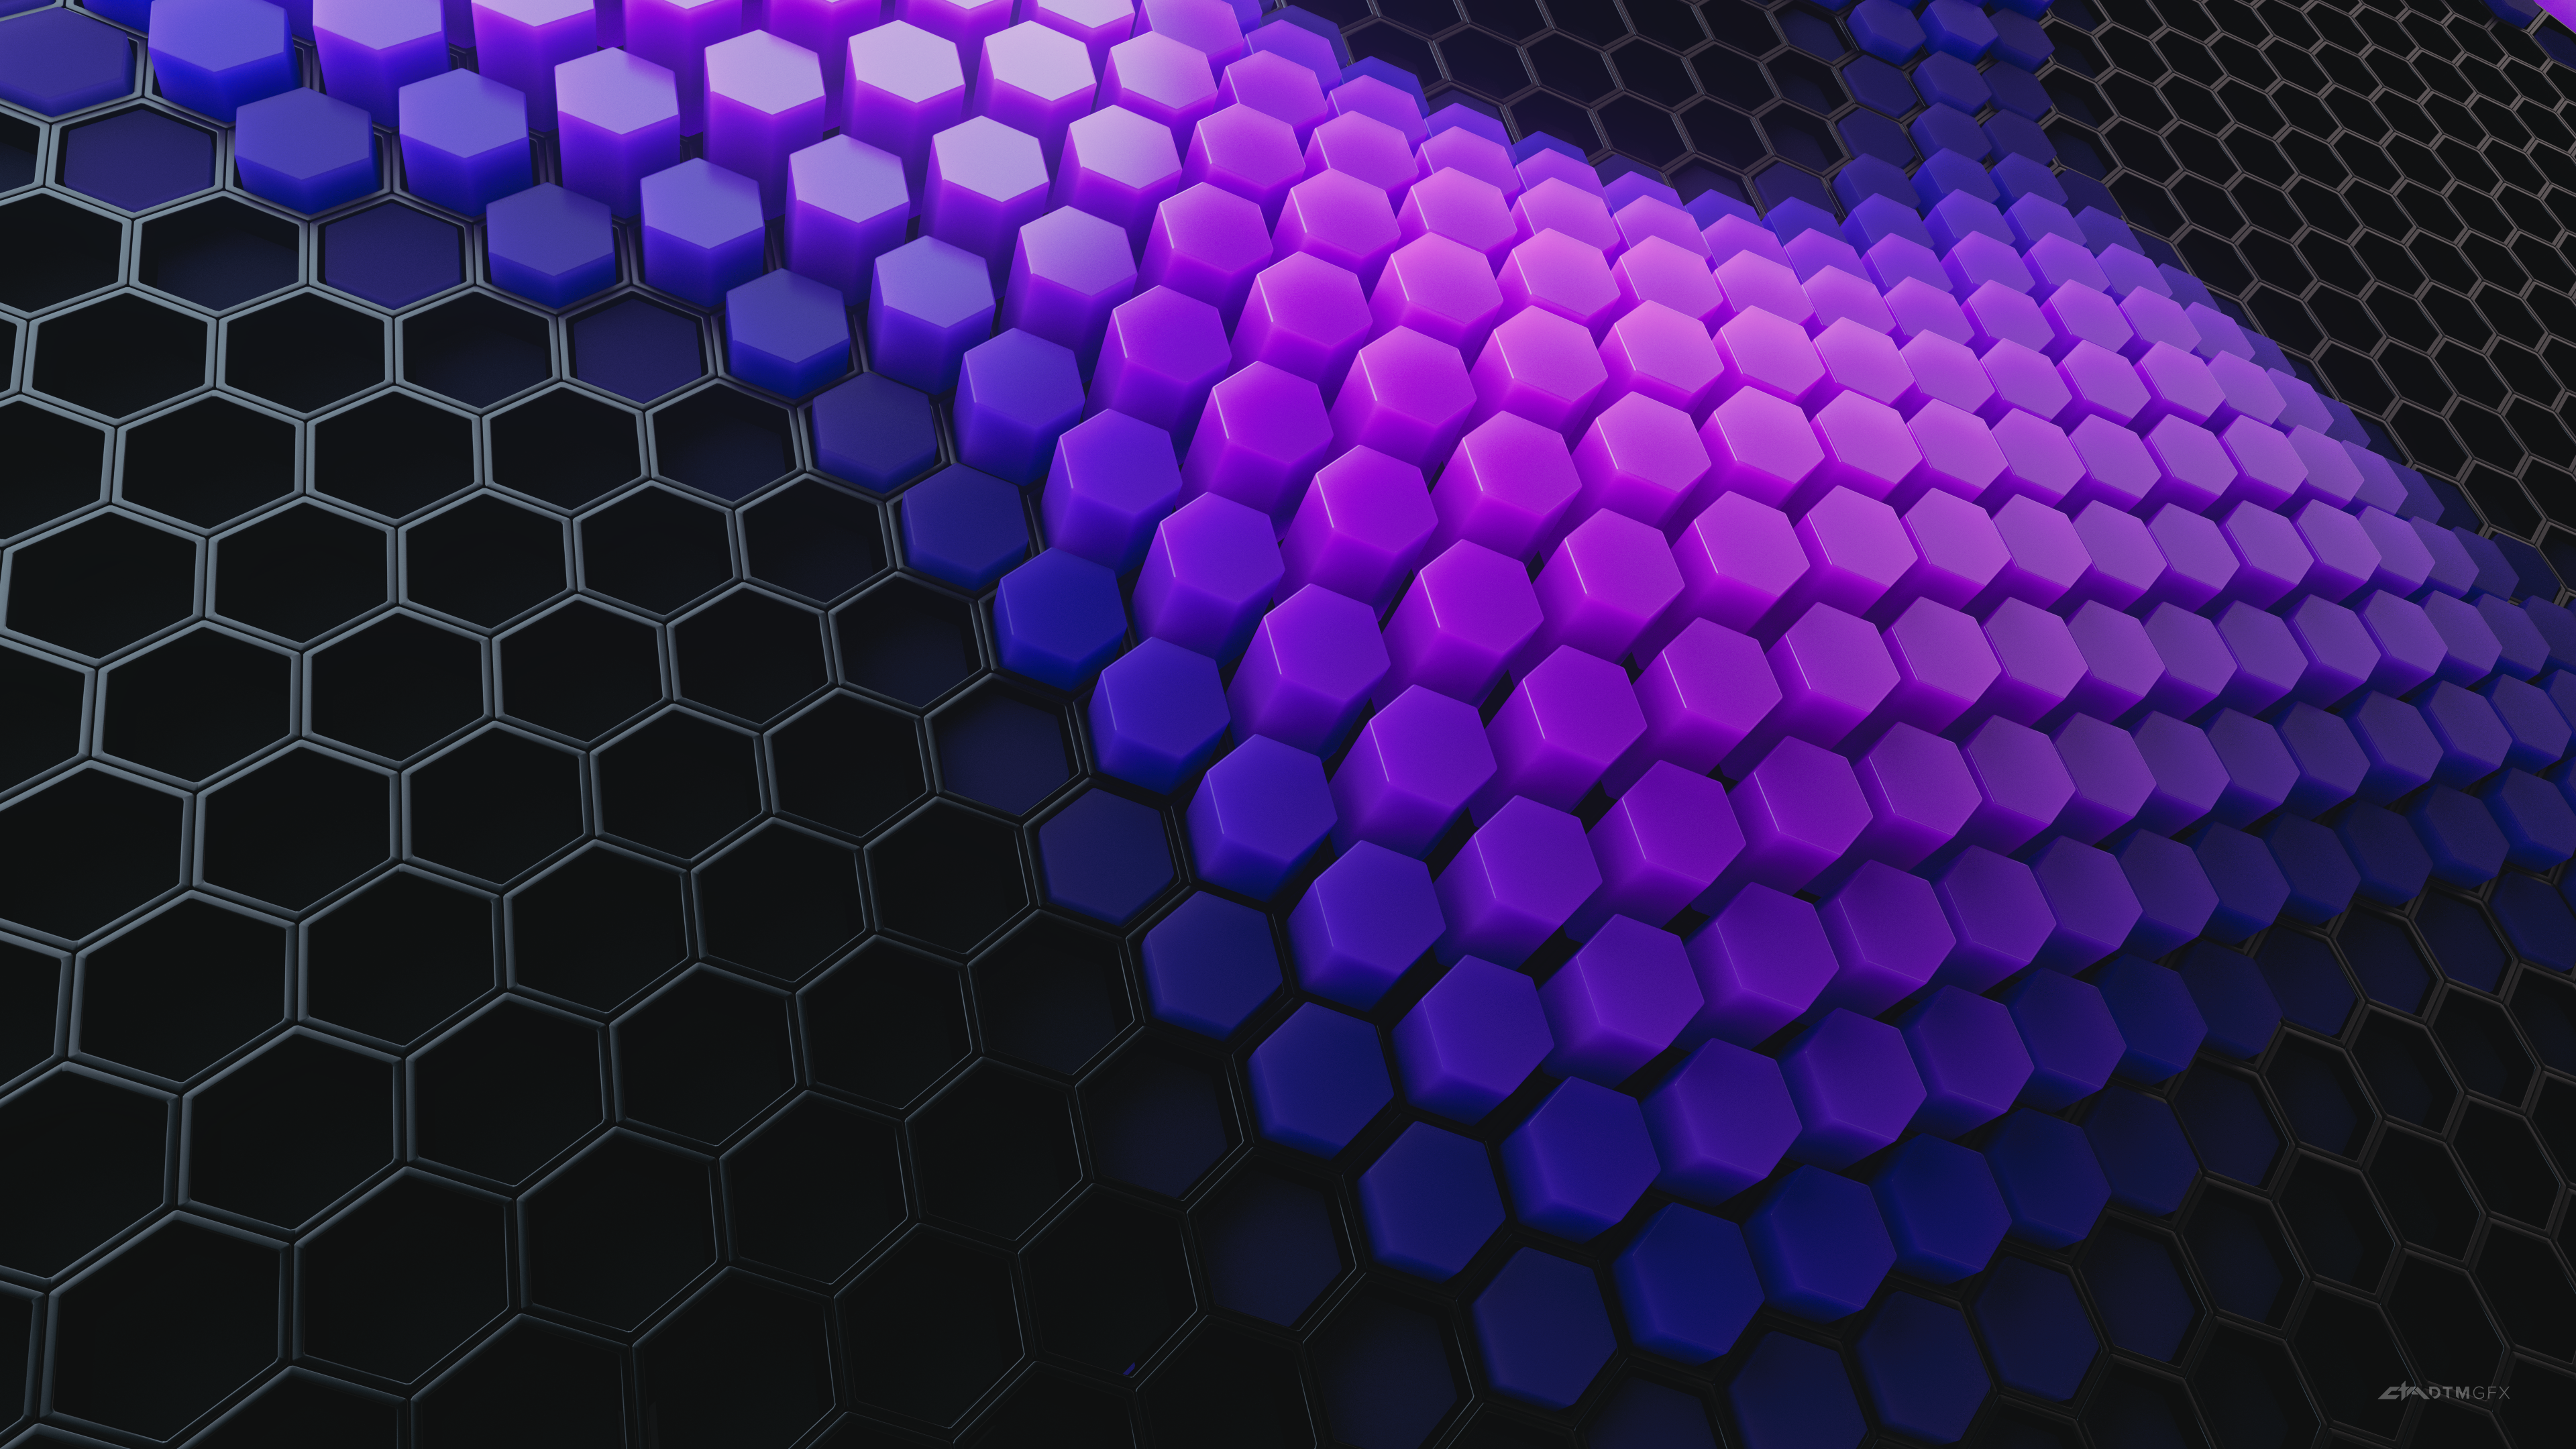 Hexagons 4K Wallpaper, Patterns, Violet background, Violet blocks, Black blocks, 3D background, Abstract